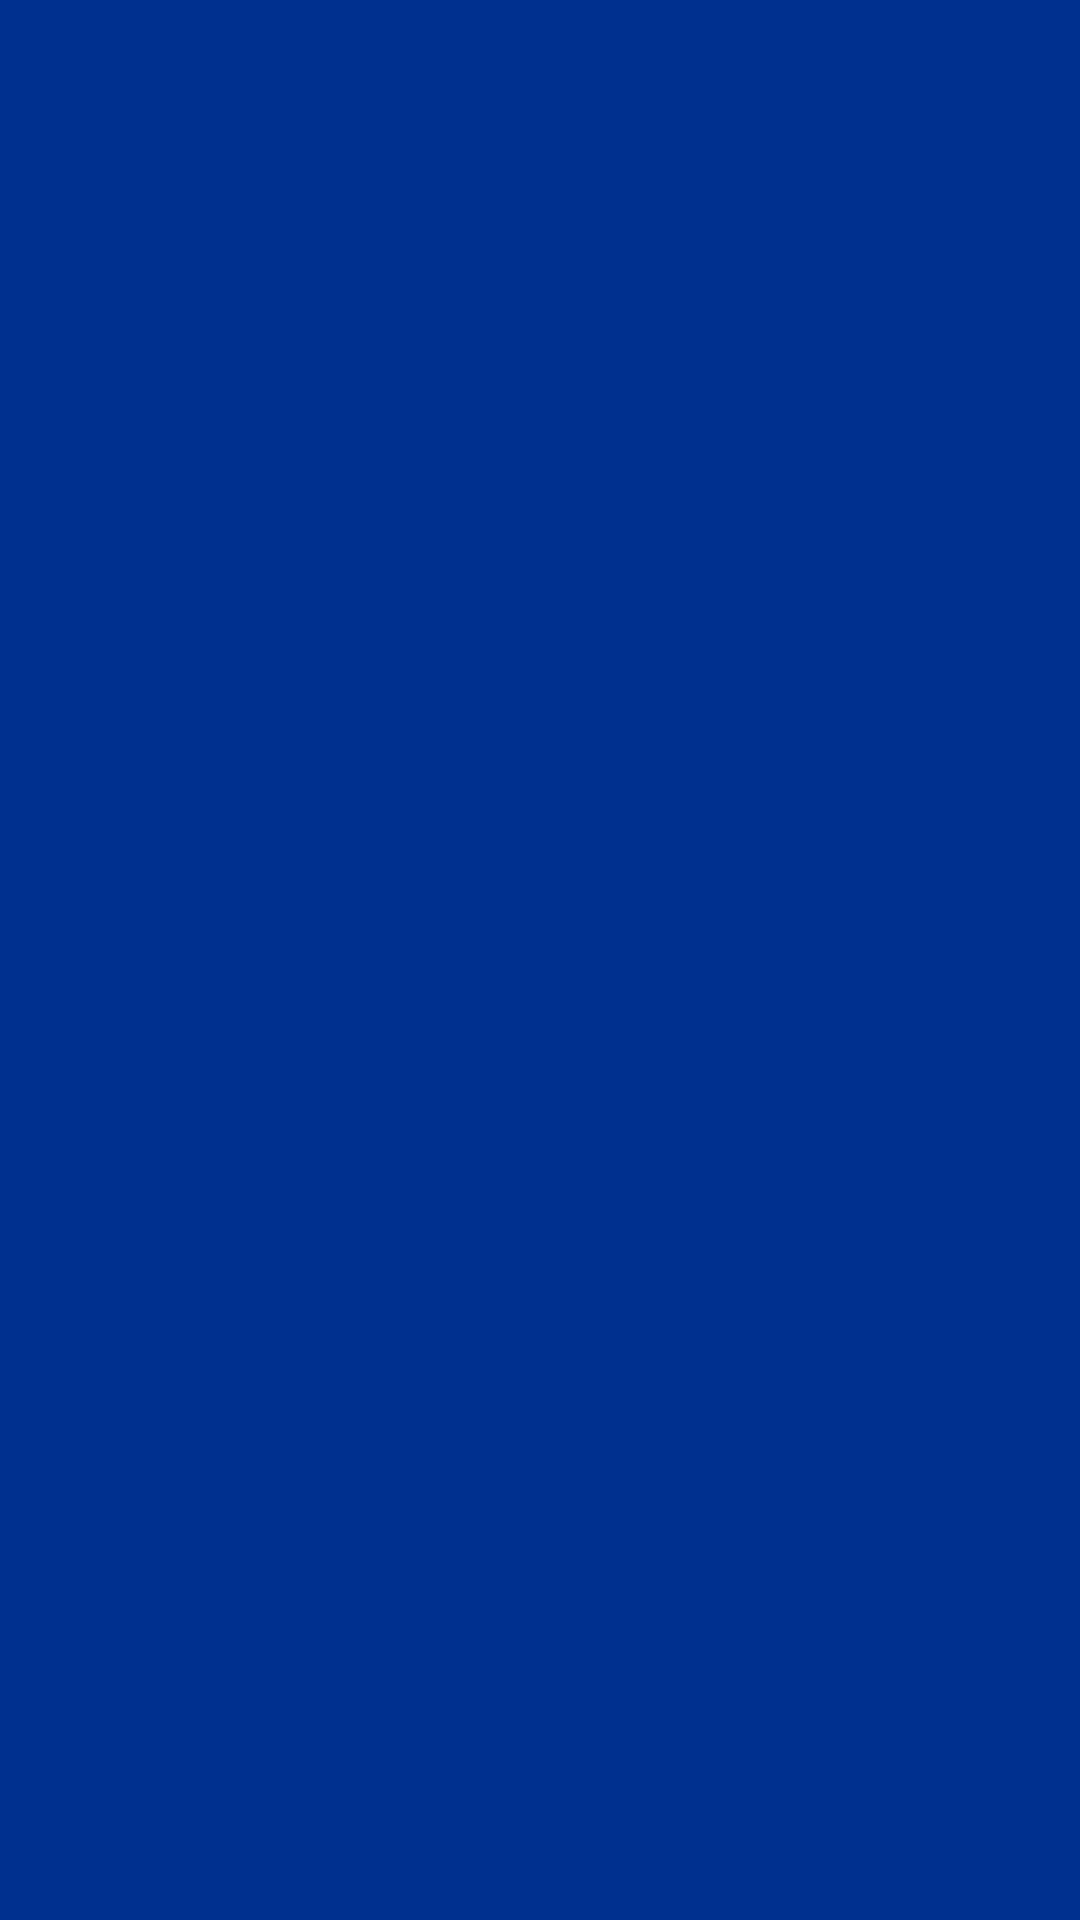 best blue wallpaper iphone | calling all colors | blue paint colors